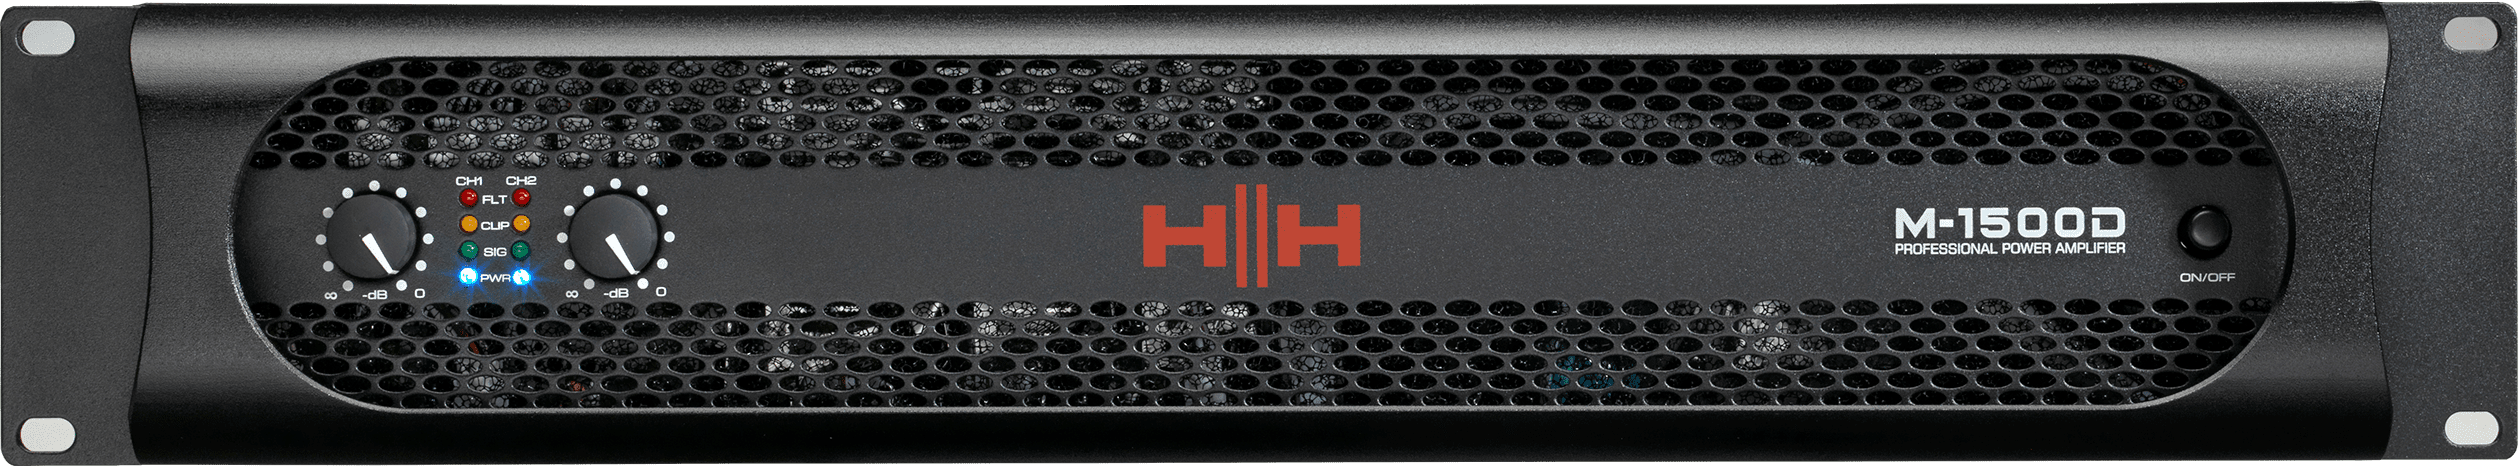 HH M-1500D - Panel view